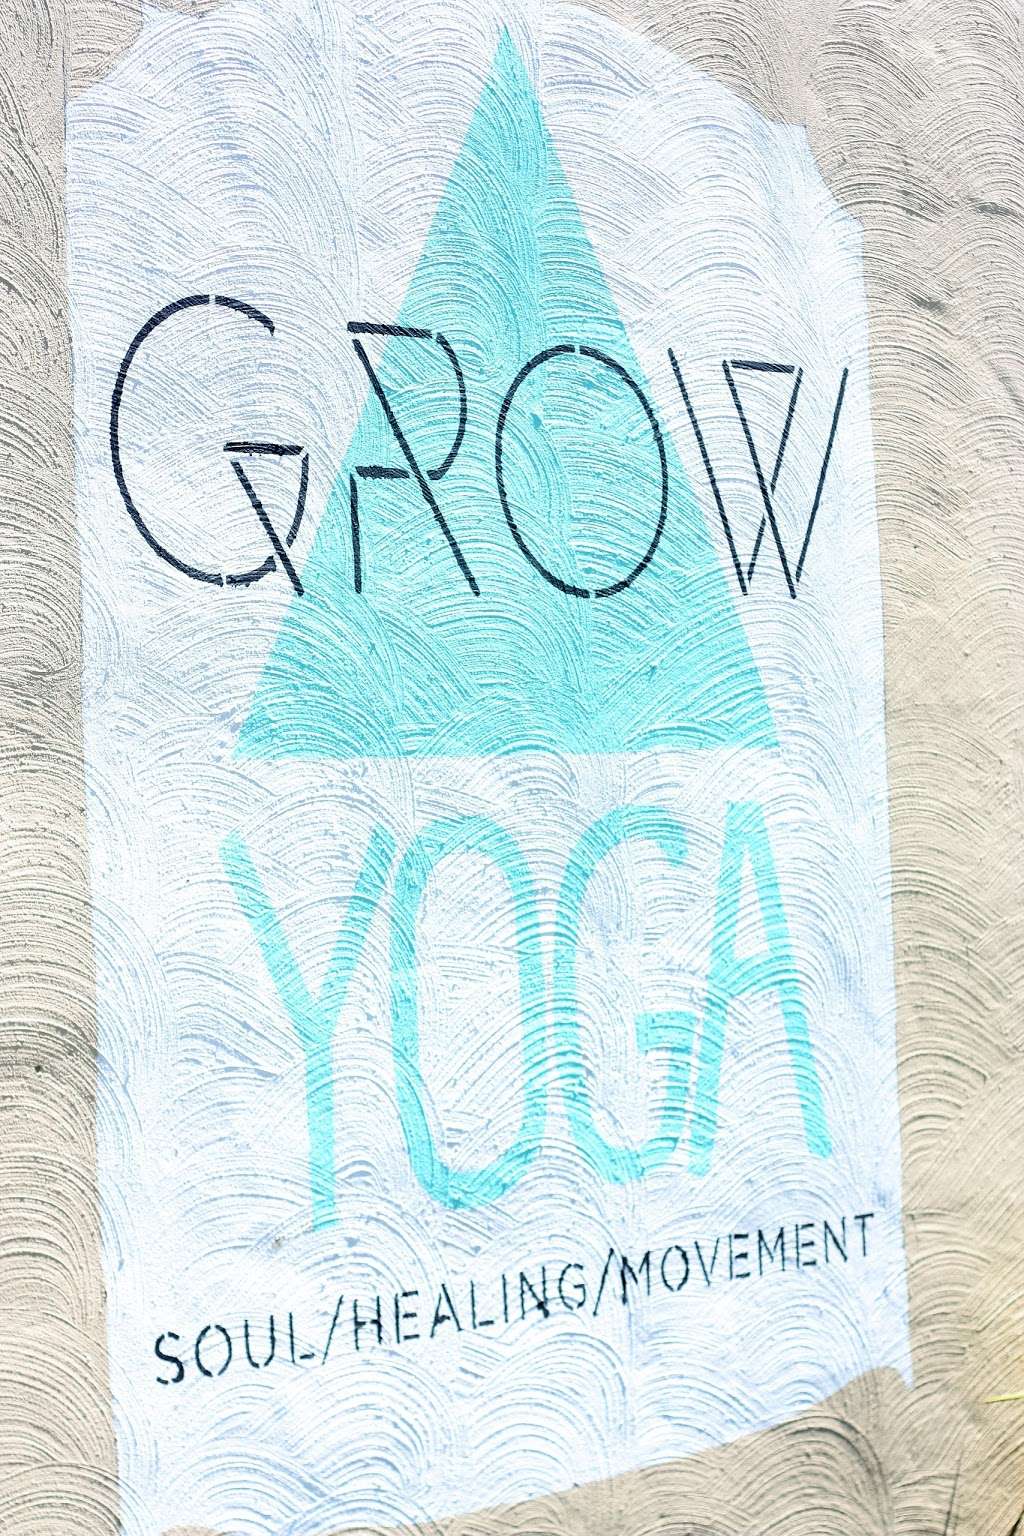 GROW Yoga | 9124 Bay Ave, North Beach, MD 20714, USA